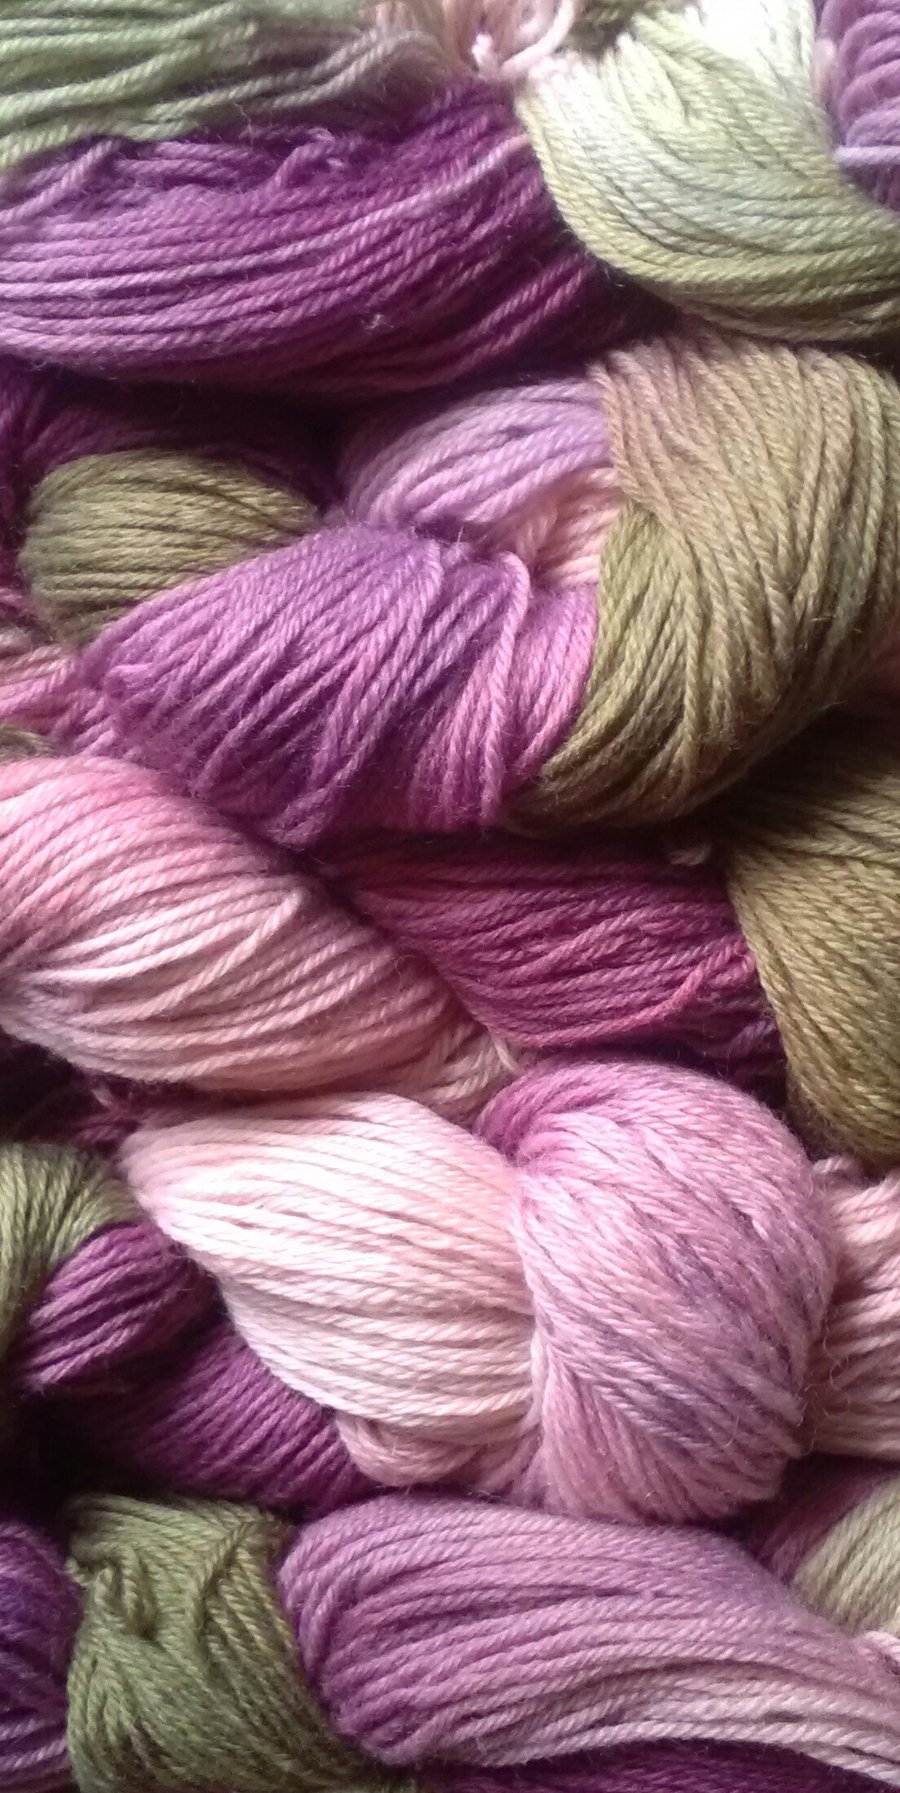 50g Hand-dyed 100% Wool  DK Superwash Merino blend purple pinks olive